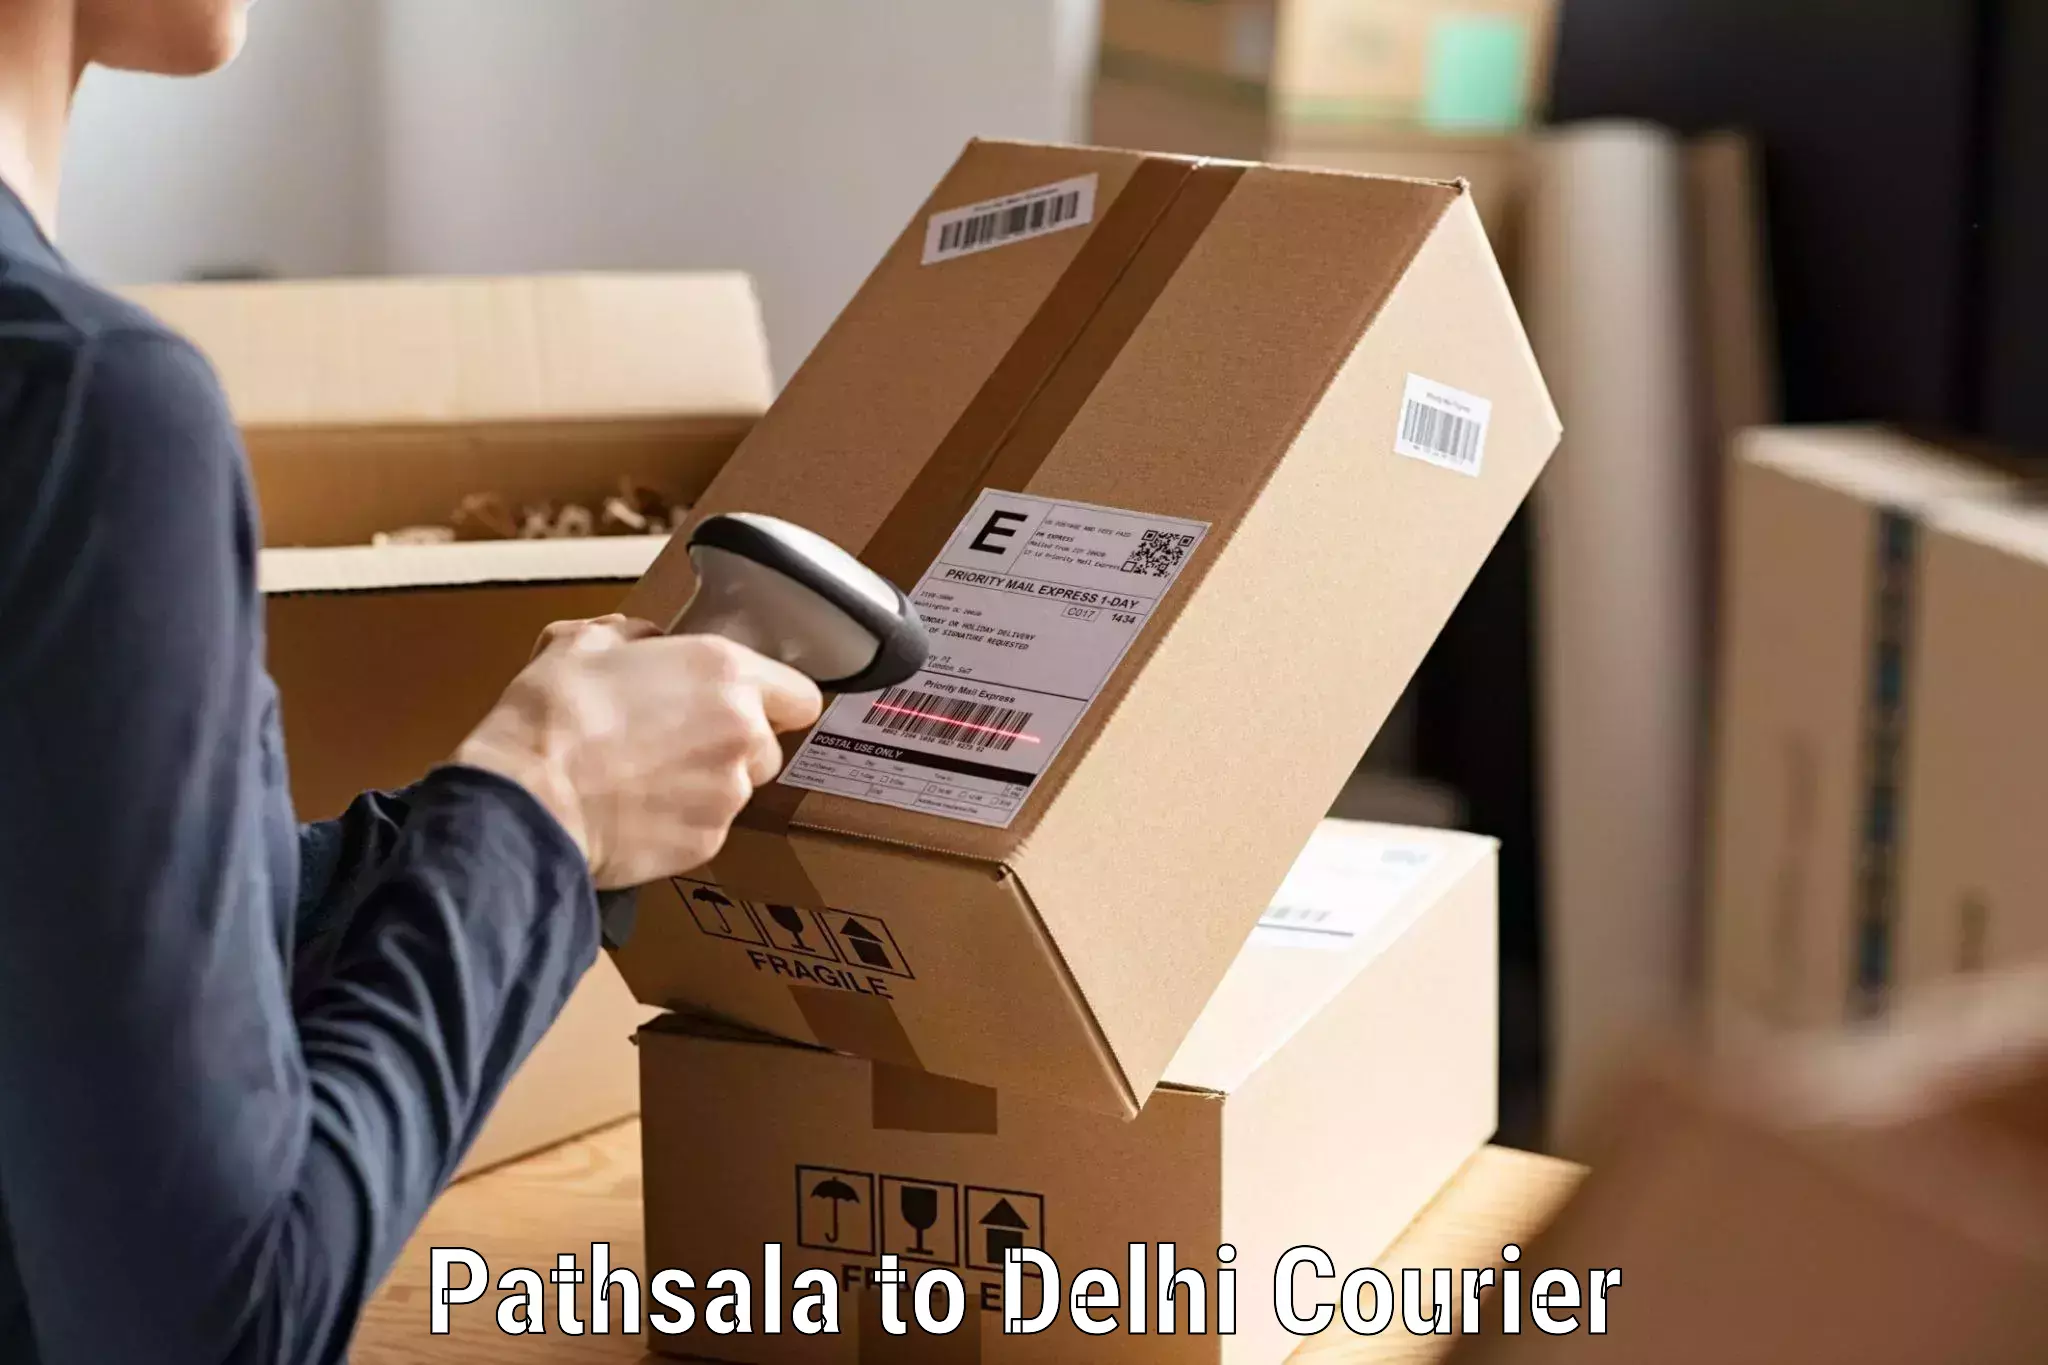 Efficient order fulfillment Pathsala to University of Delhi